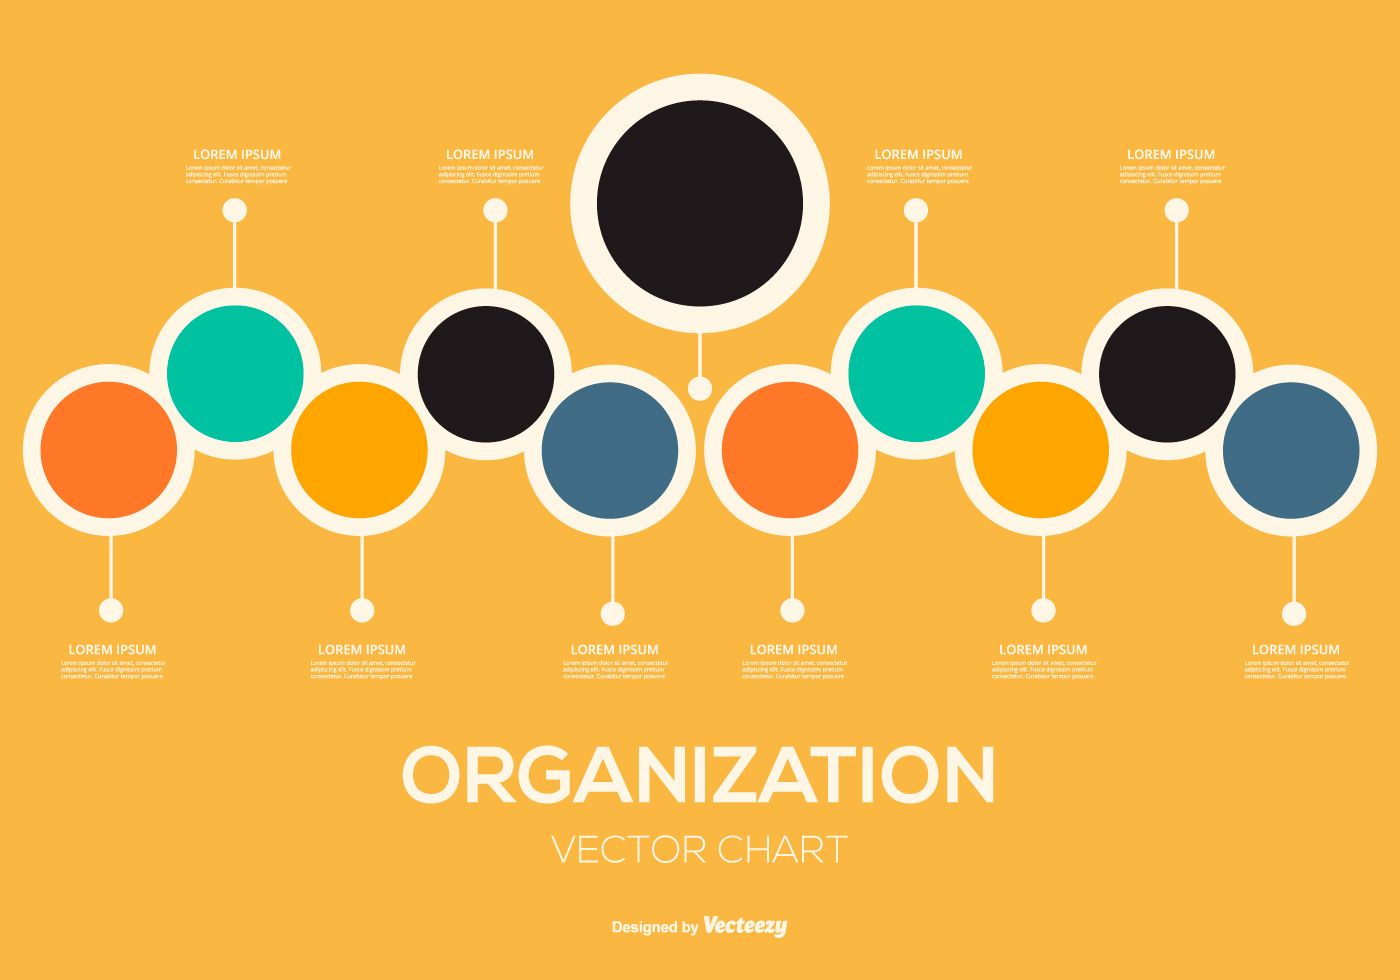 Create organizational chart with Xamarin.iOS Diagram | Syncfusion